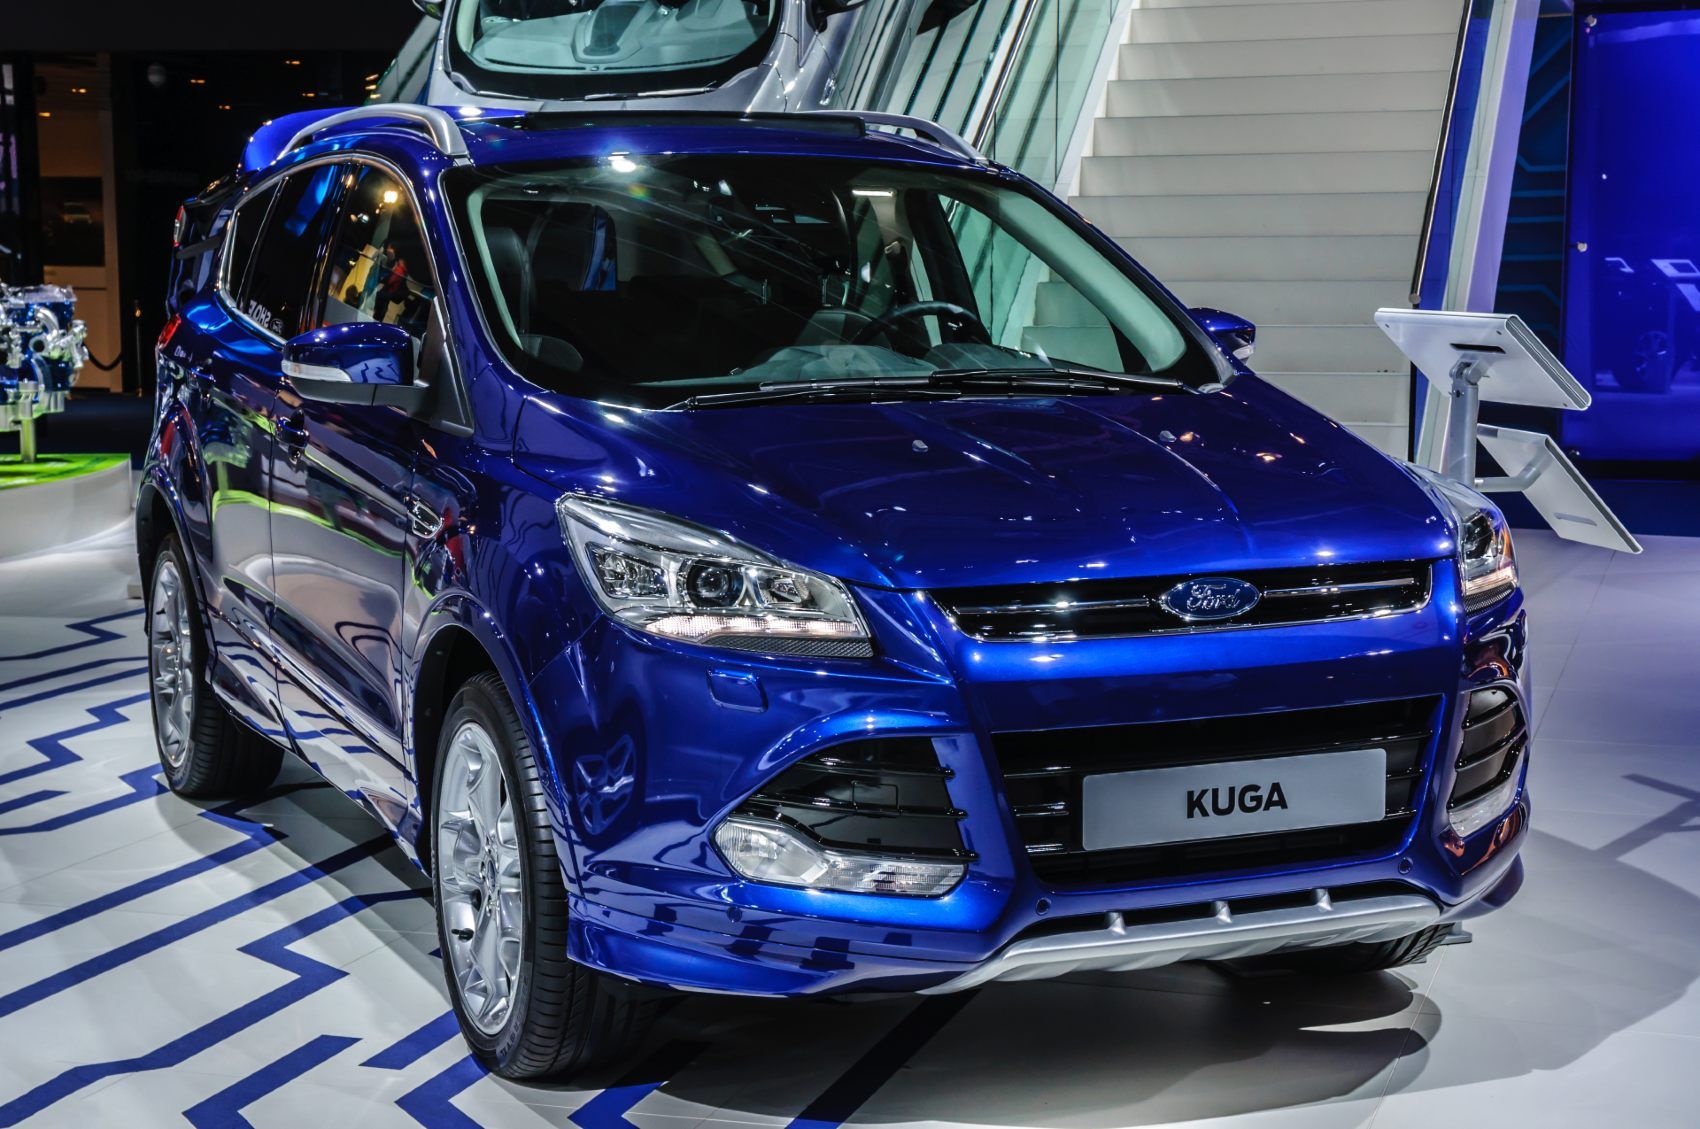 Blue Ford Kuga in an auto show showroom - kuga recall